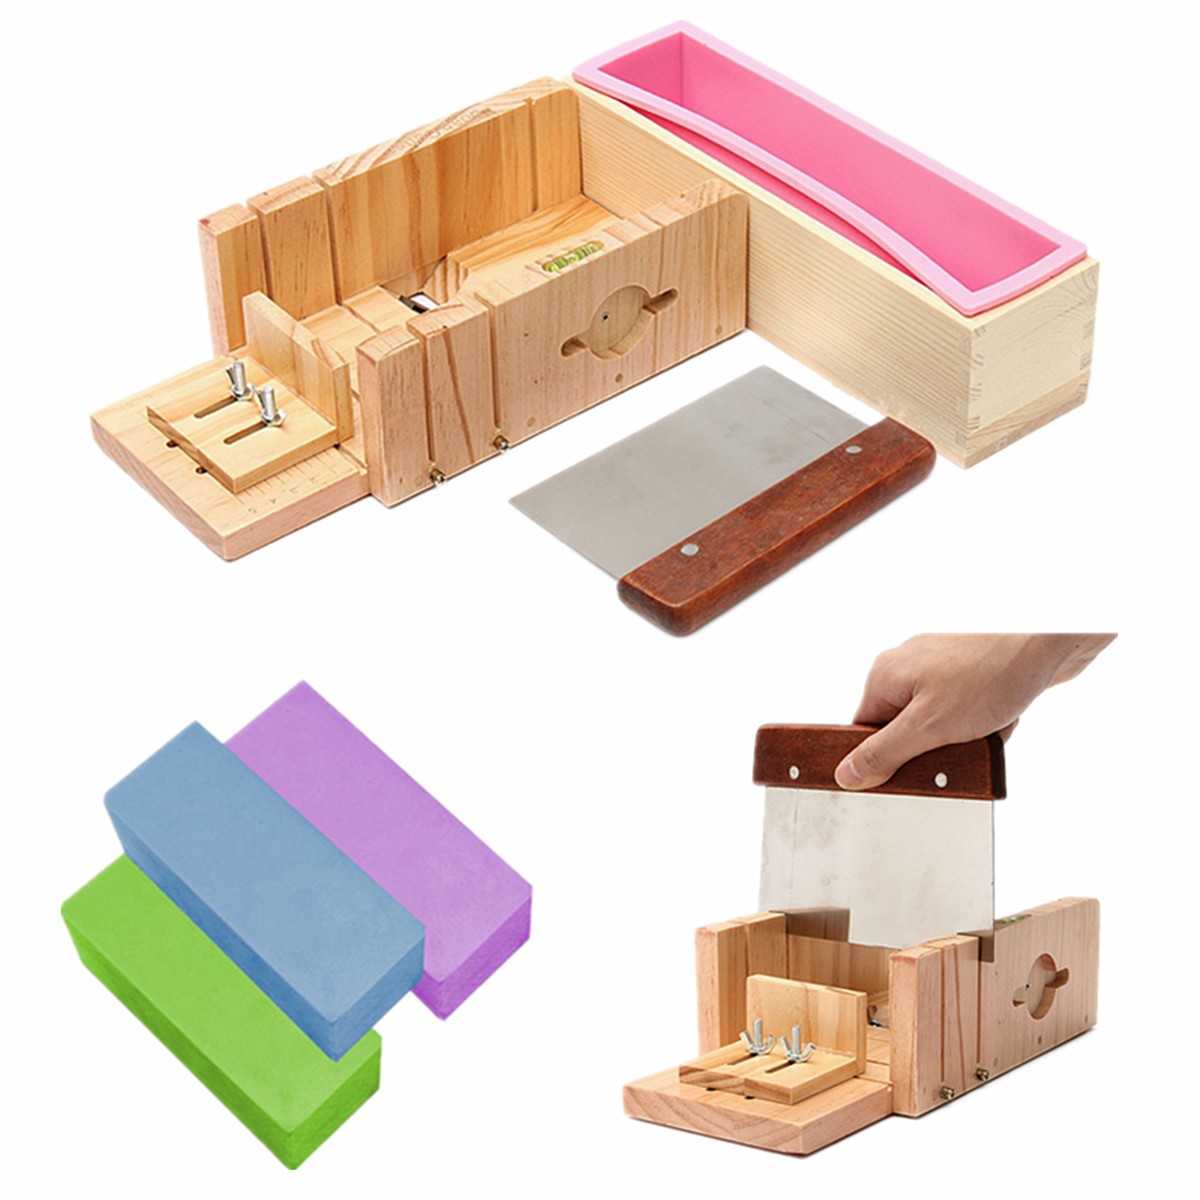 Wooden-Handmade-Loaf-Soap-Cake-Mould-Silicone-Making-Slicer-Cutter-1618567-2